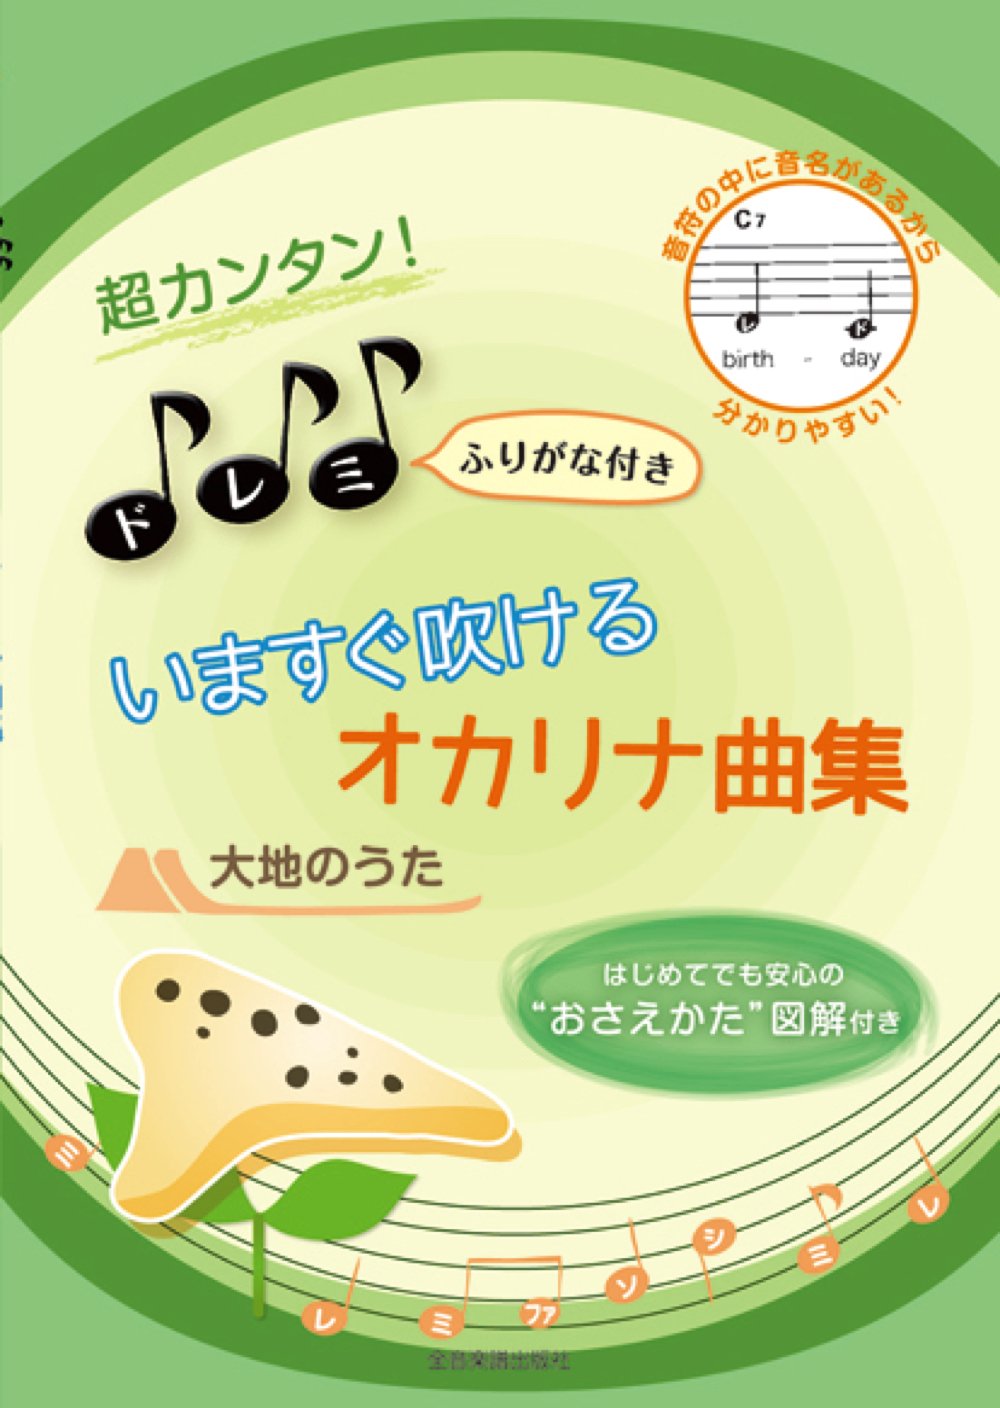 Beginner Ocarina Solo "Daichi no Uta" Sheet Music Book